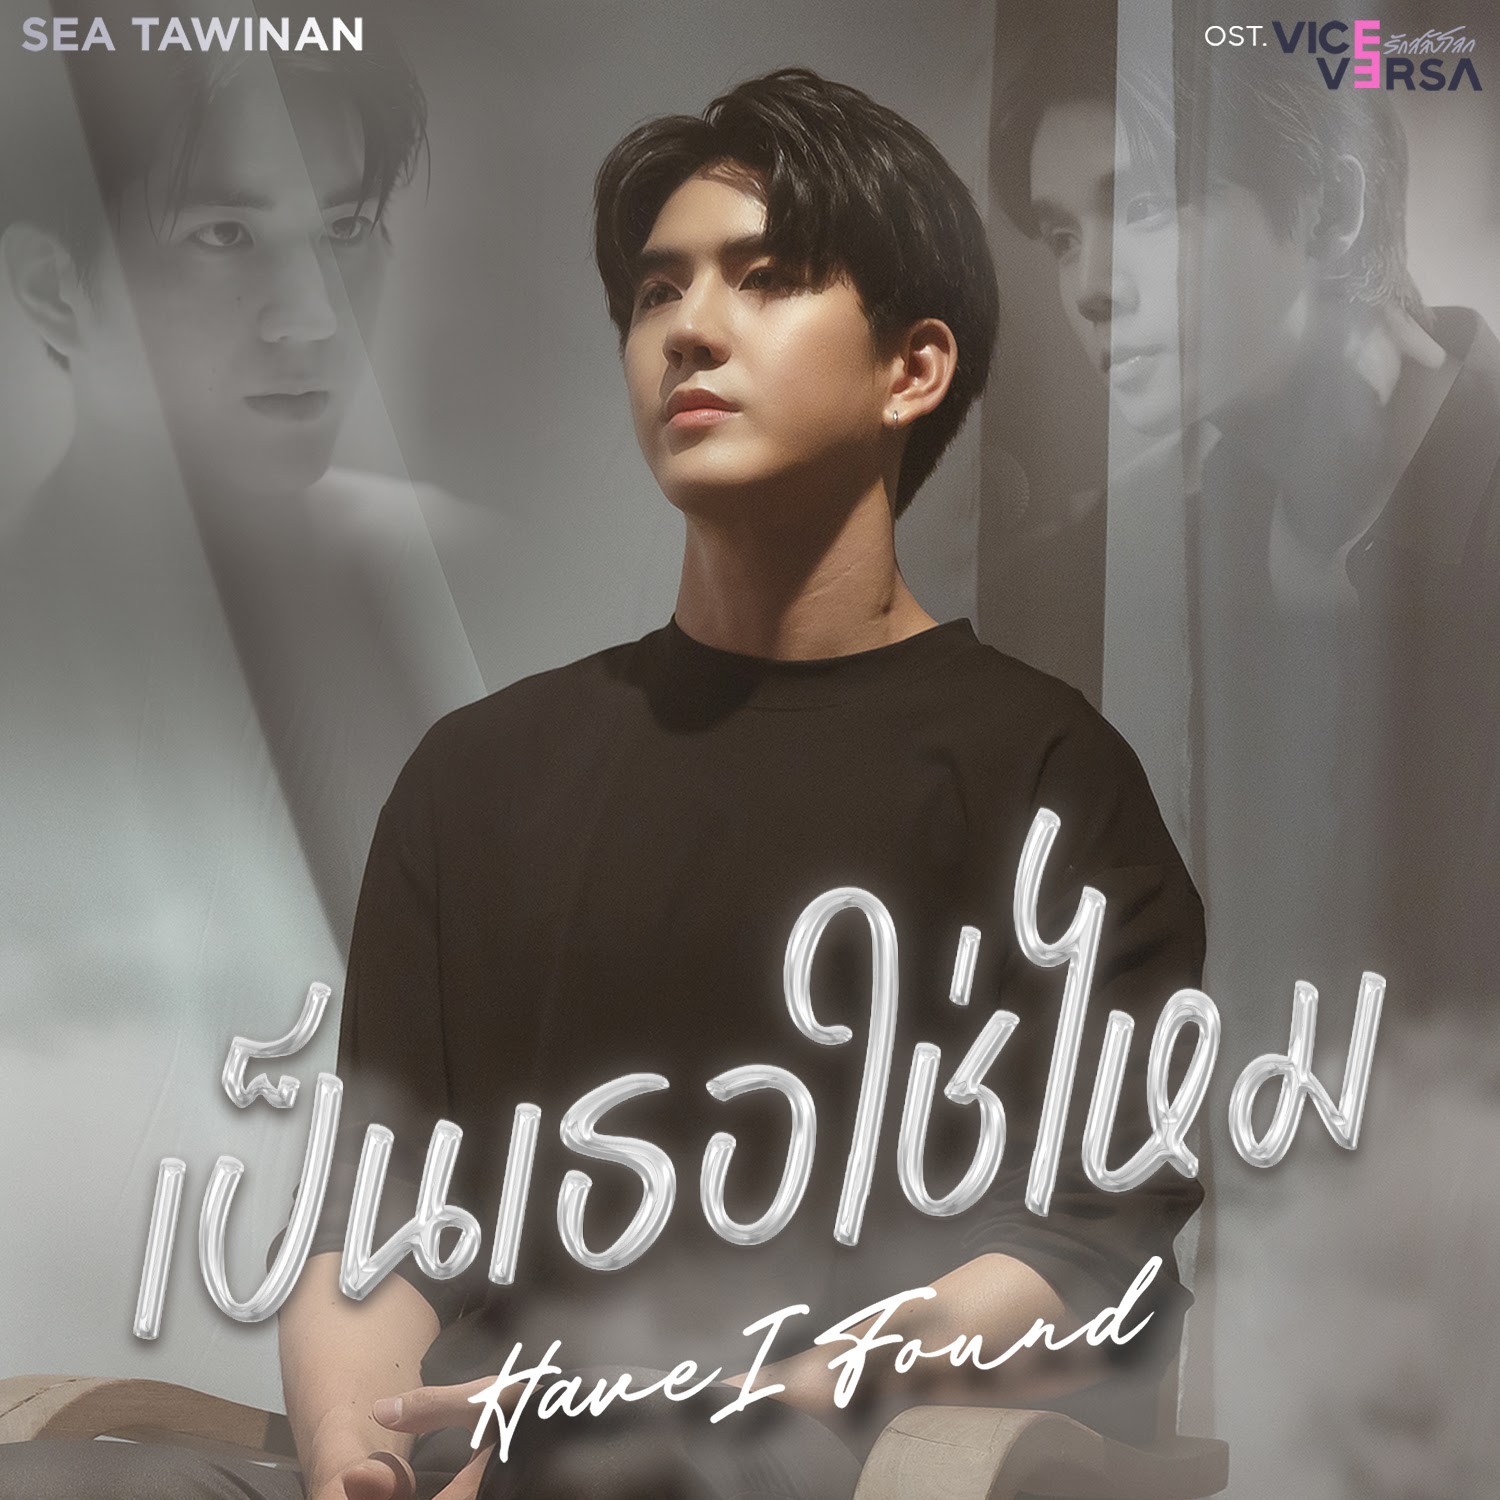 SEA TAWINAN - เป็นเธอใช่ไหม(Have I Found) (OST Vice Versa) Cover